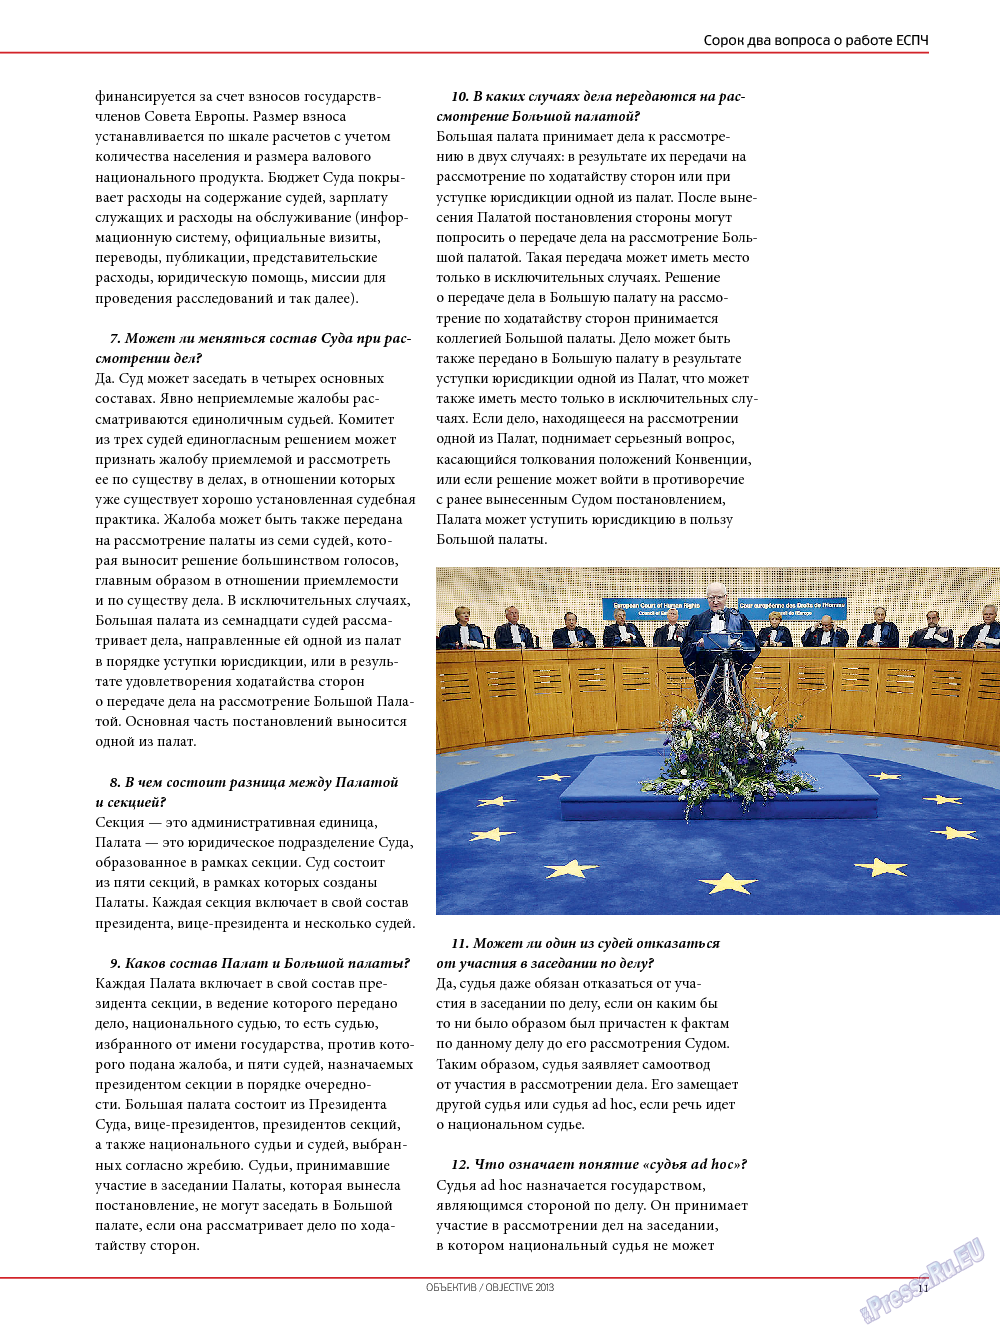 Объектив EU, журнал. 2013 №3 стр.13